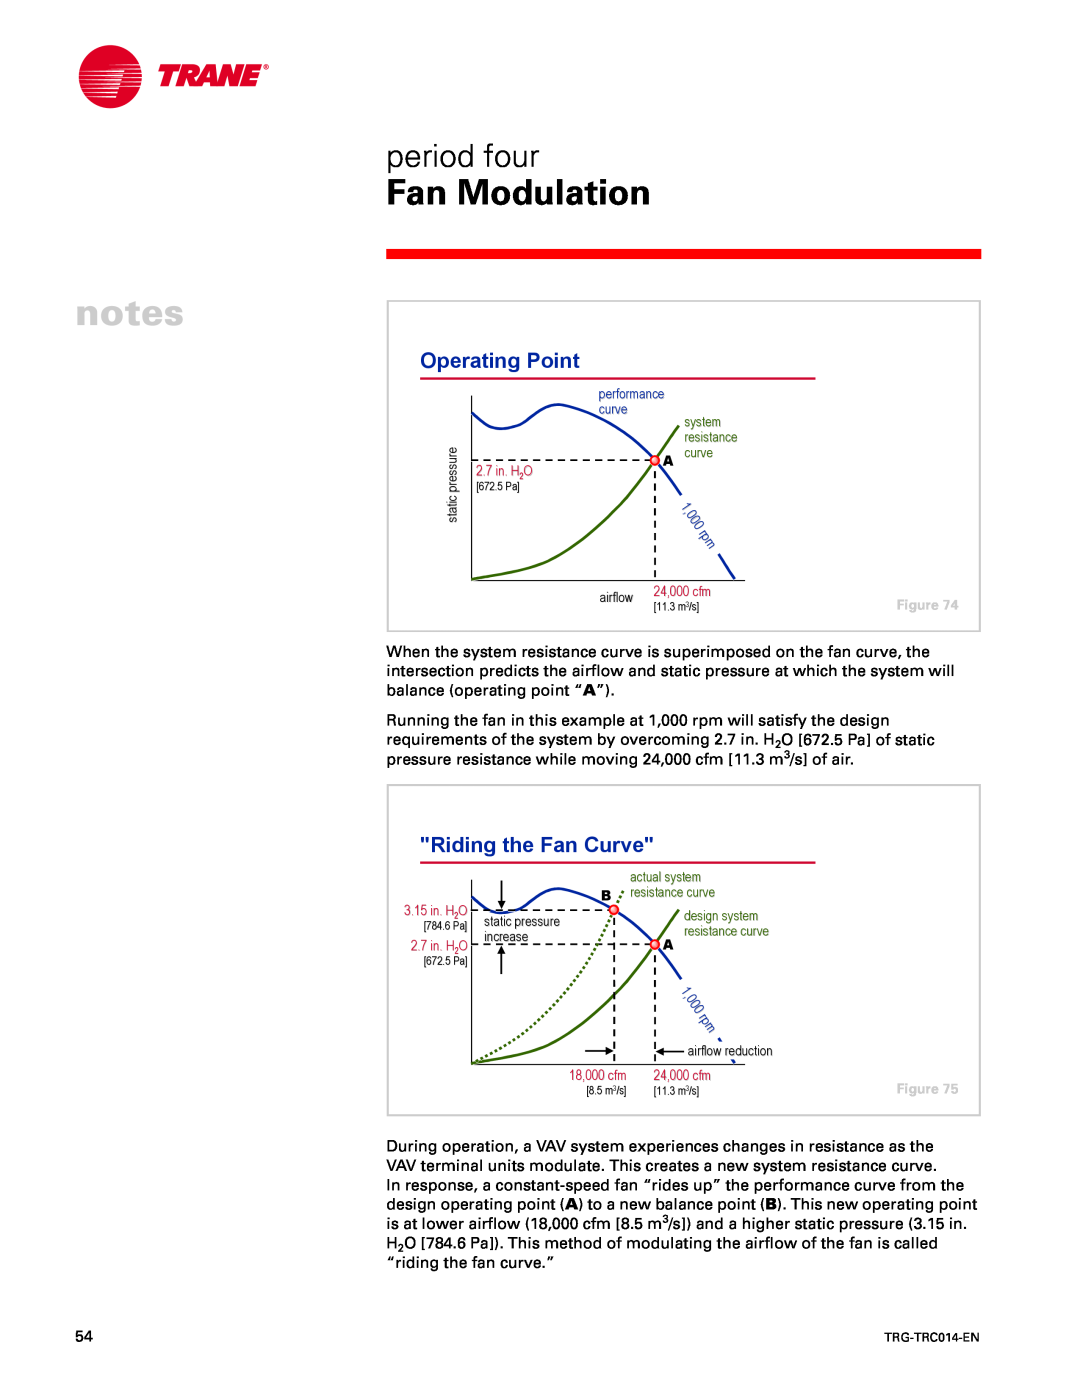 Trane TRG-TRC014-EN manual Operating Point, Riding the Fan Curve, Fan Modulation, period four 